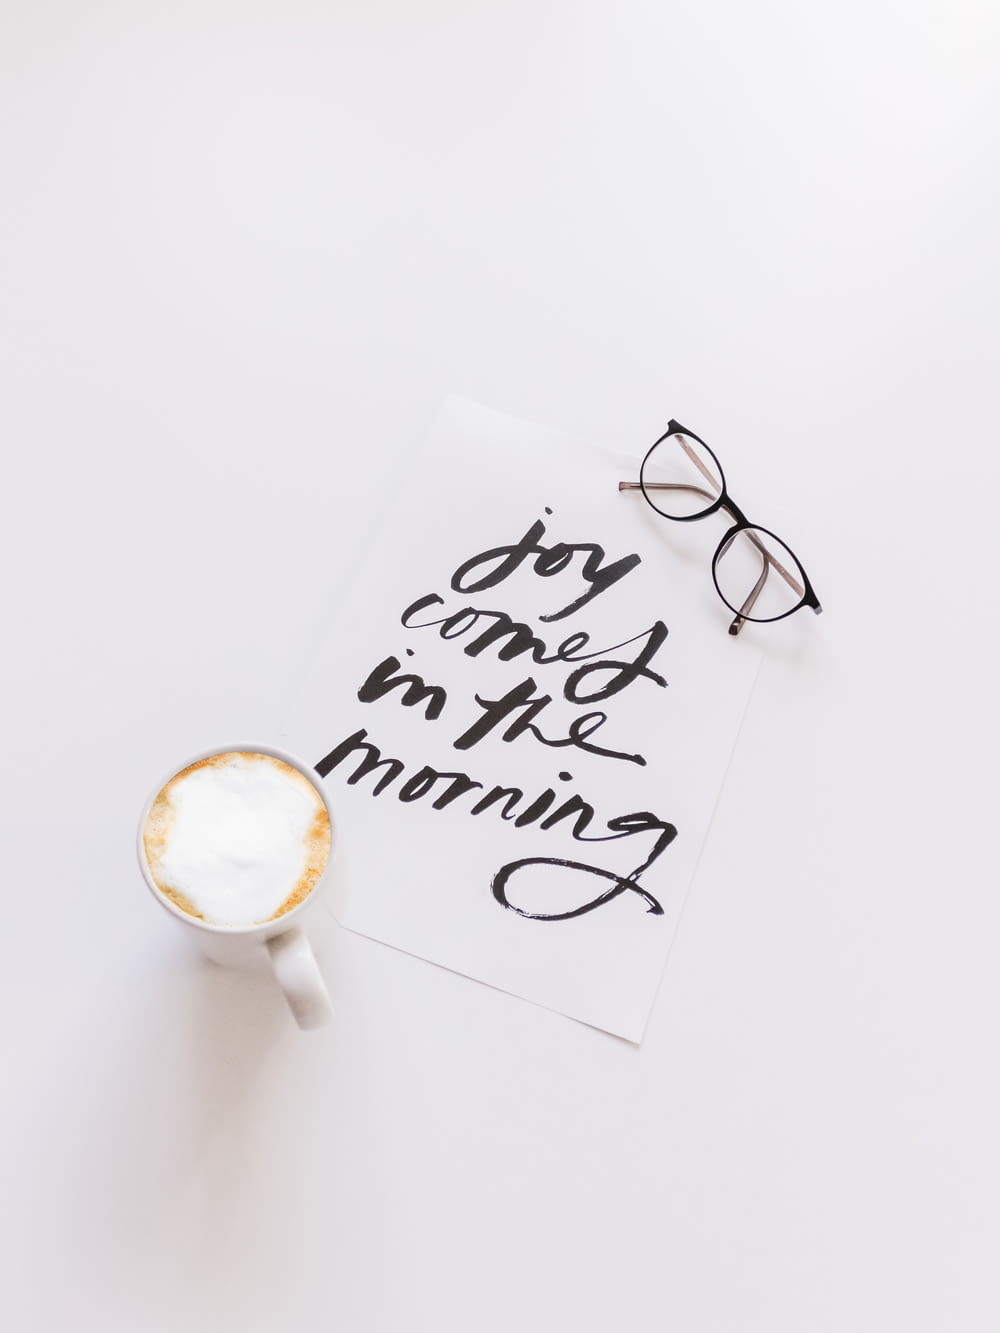 occhiali da vista con montatura nera accanto a una tazza di caffè in ceramica bianca